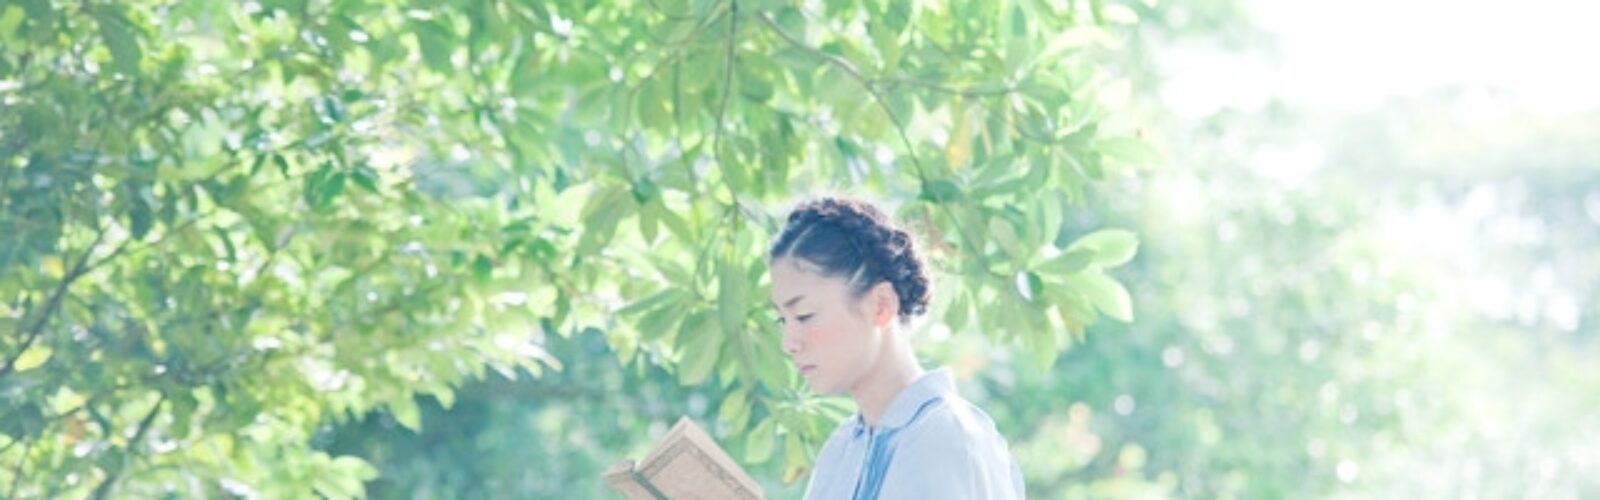 Ragazza-giapponese-legge-libro-alberi